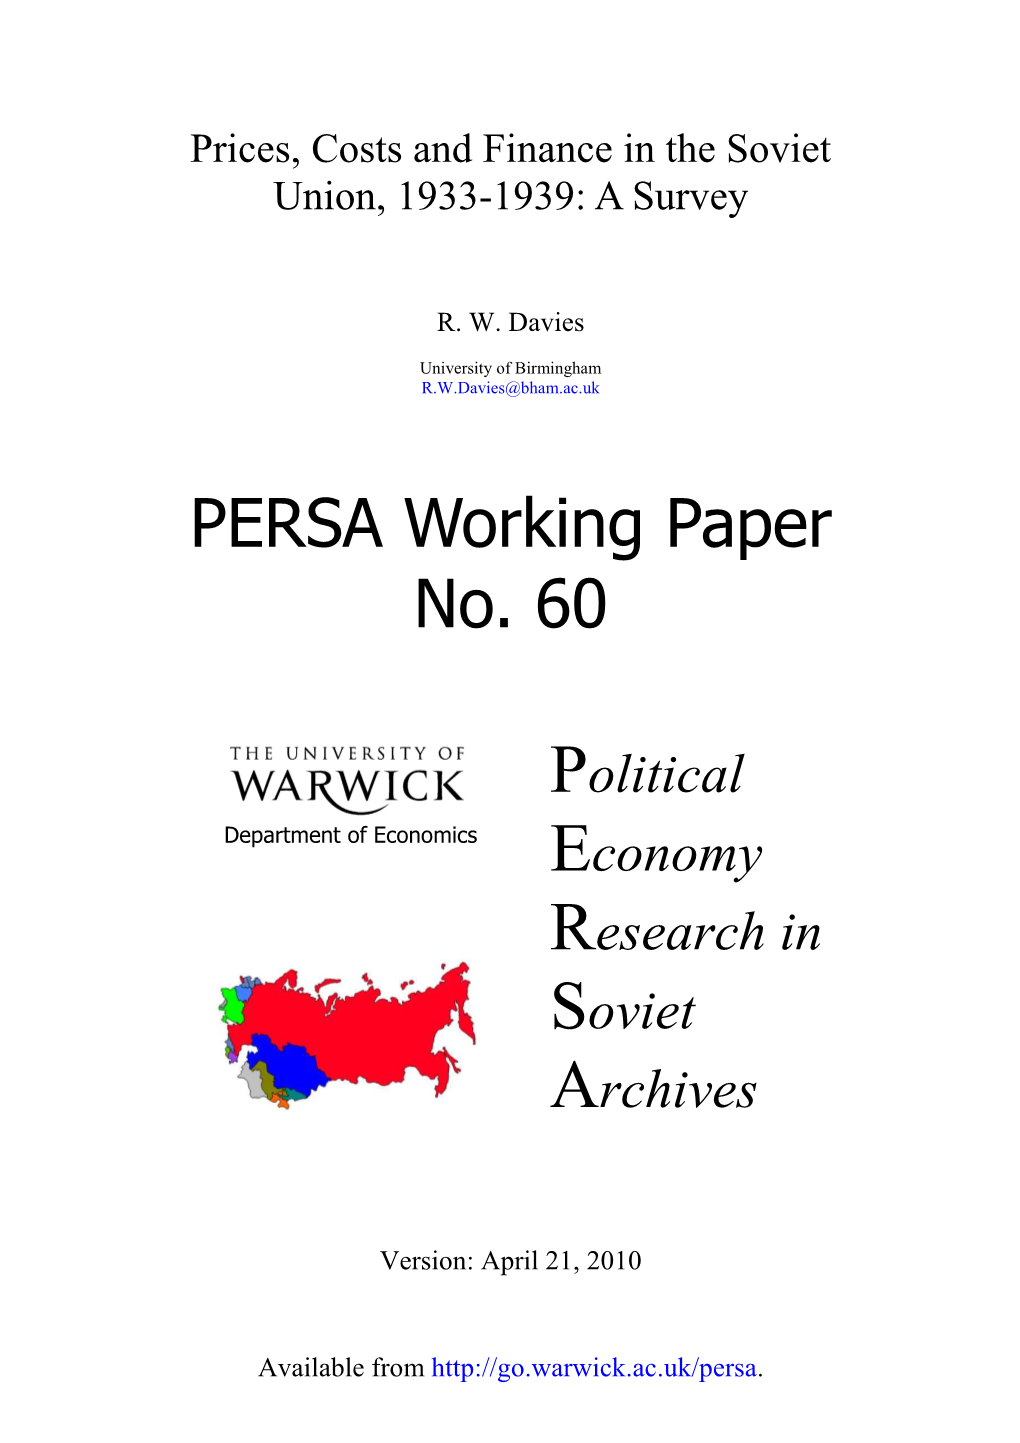 PERSA Working Paper No. 60